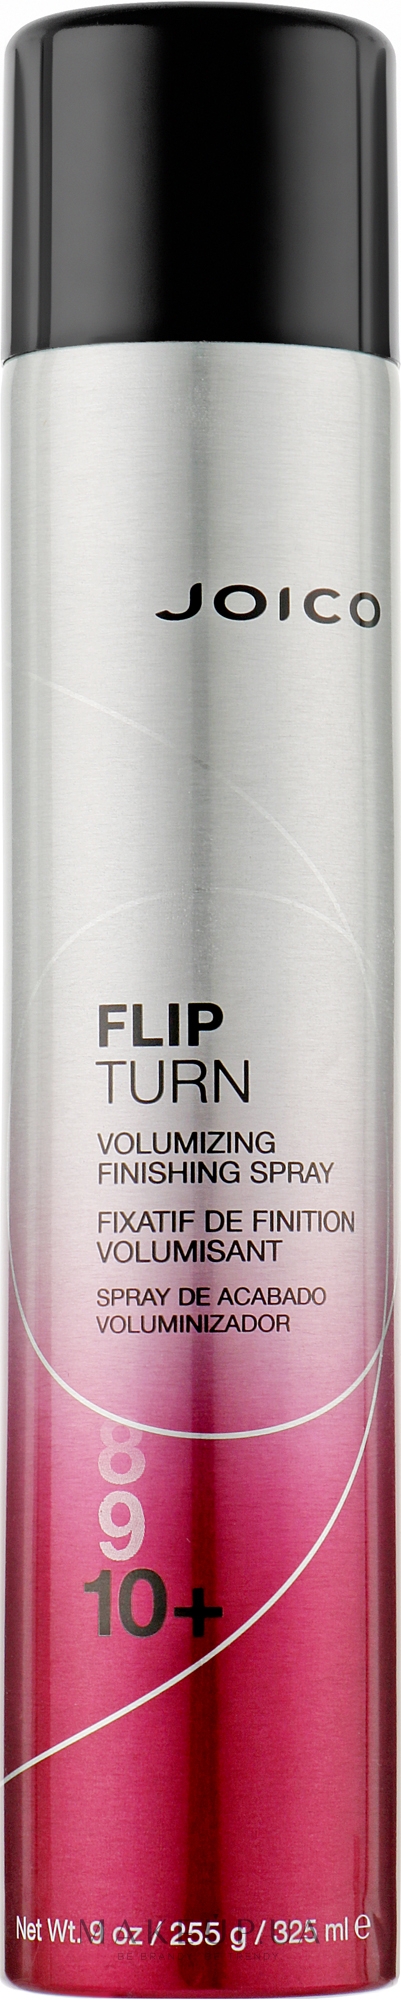 Финишный спрей для увеличения объема (фиксация 10 + ) - Joico Flip Turn Volumizing Finishing Spray — фото 325ml